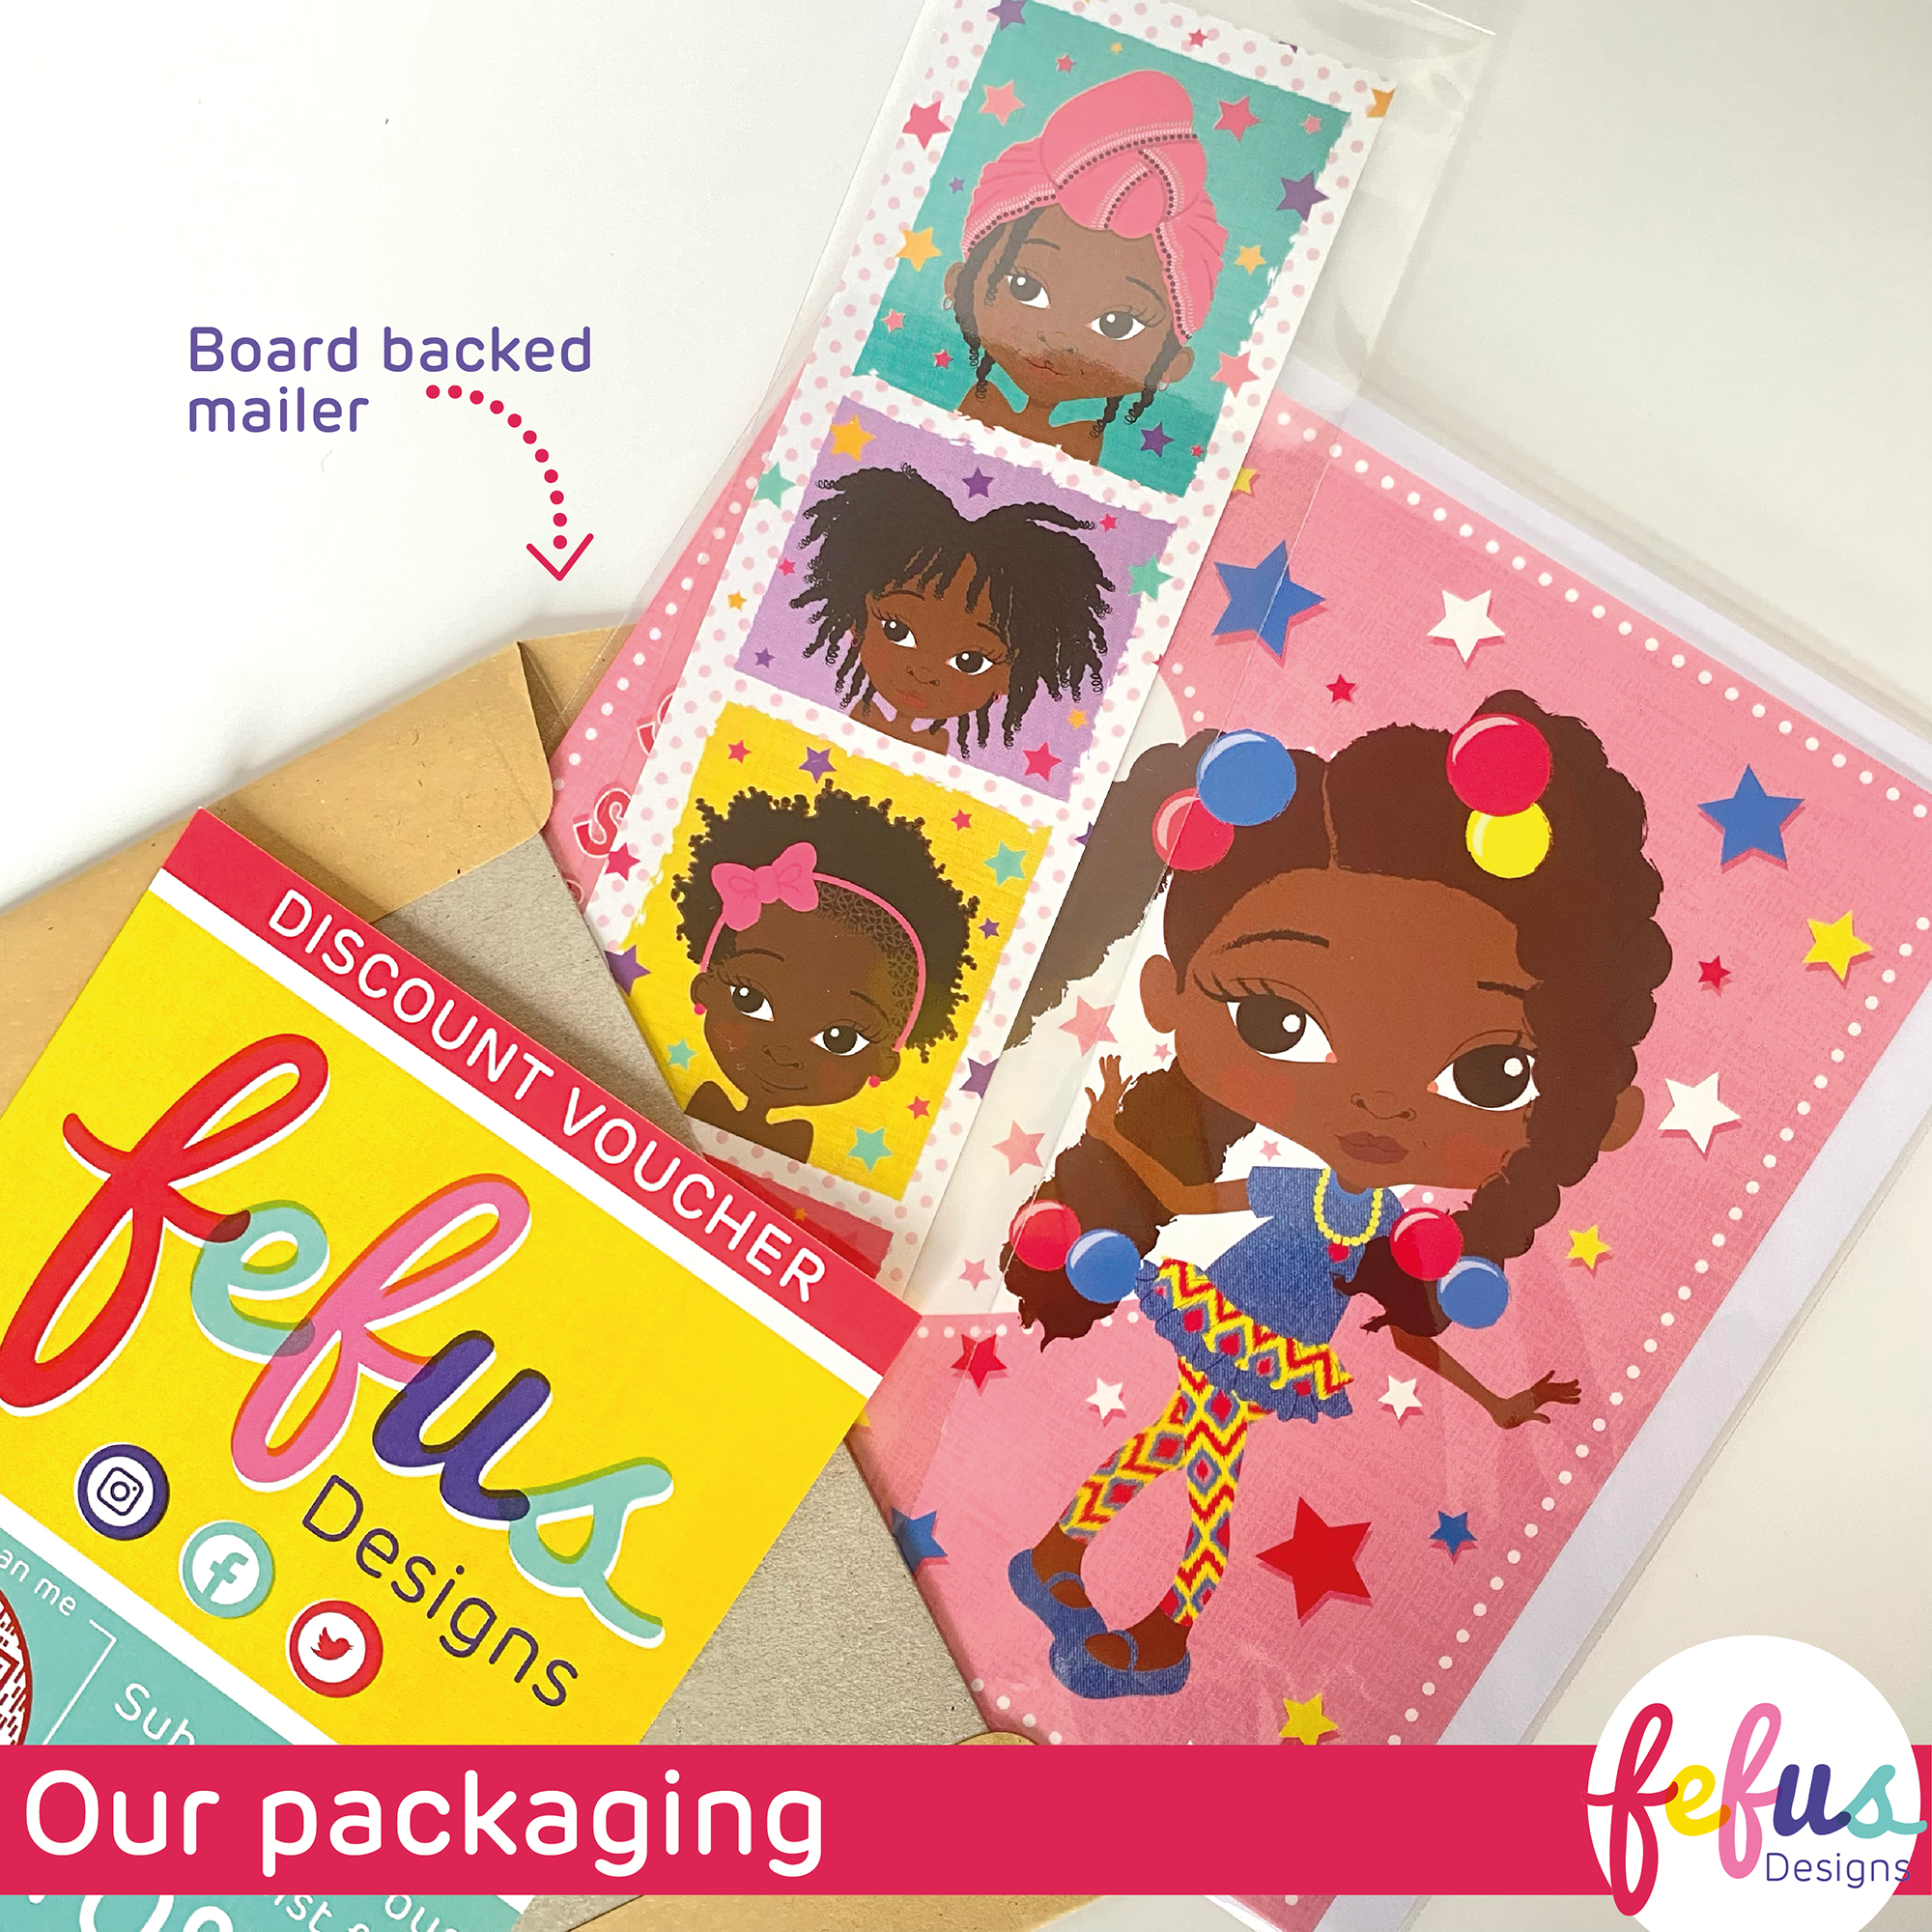 Second Birthday Afro Puff Black Girl  - Black Girl Birthday Card | Fefus Designs